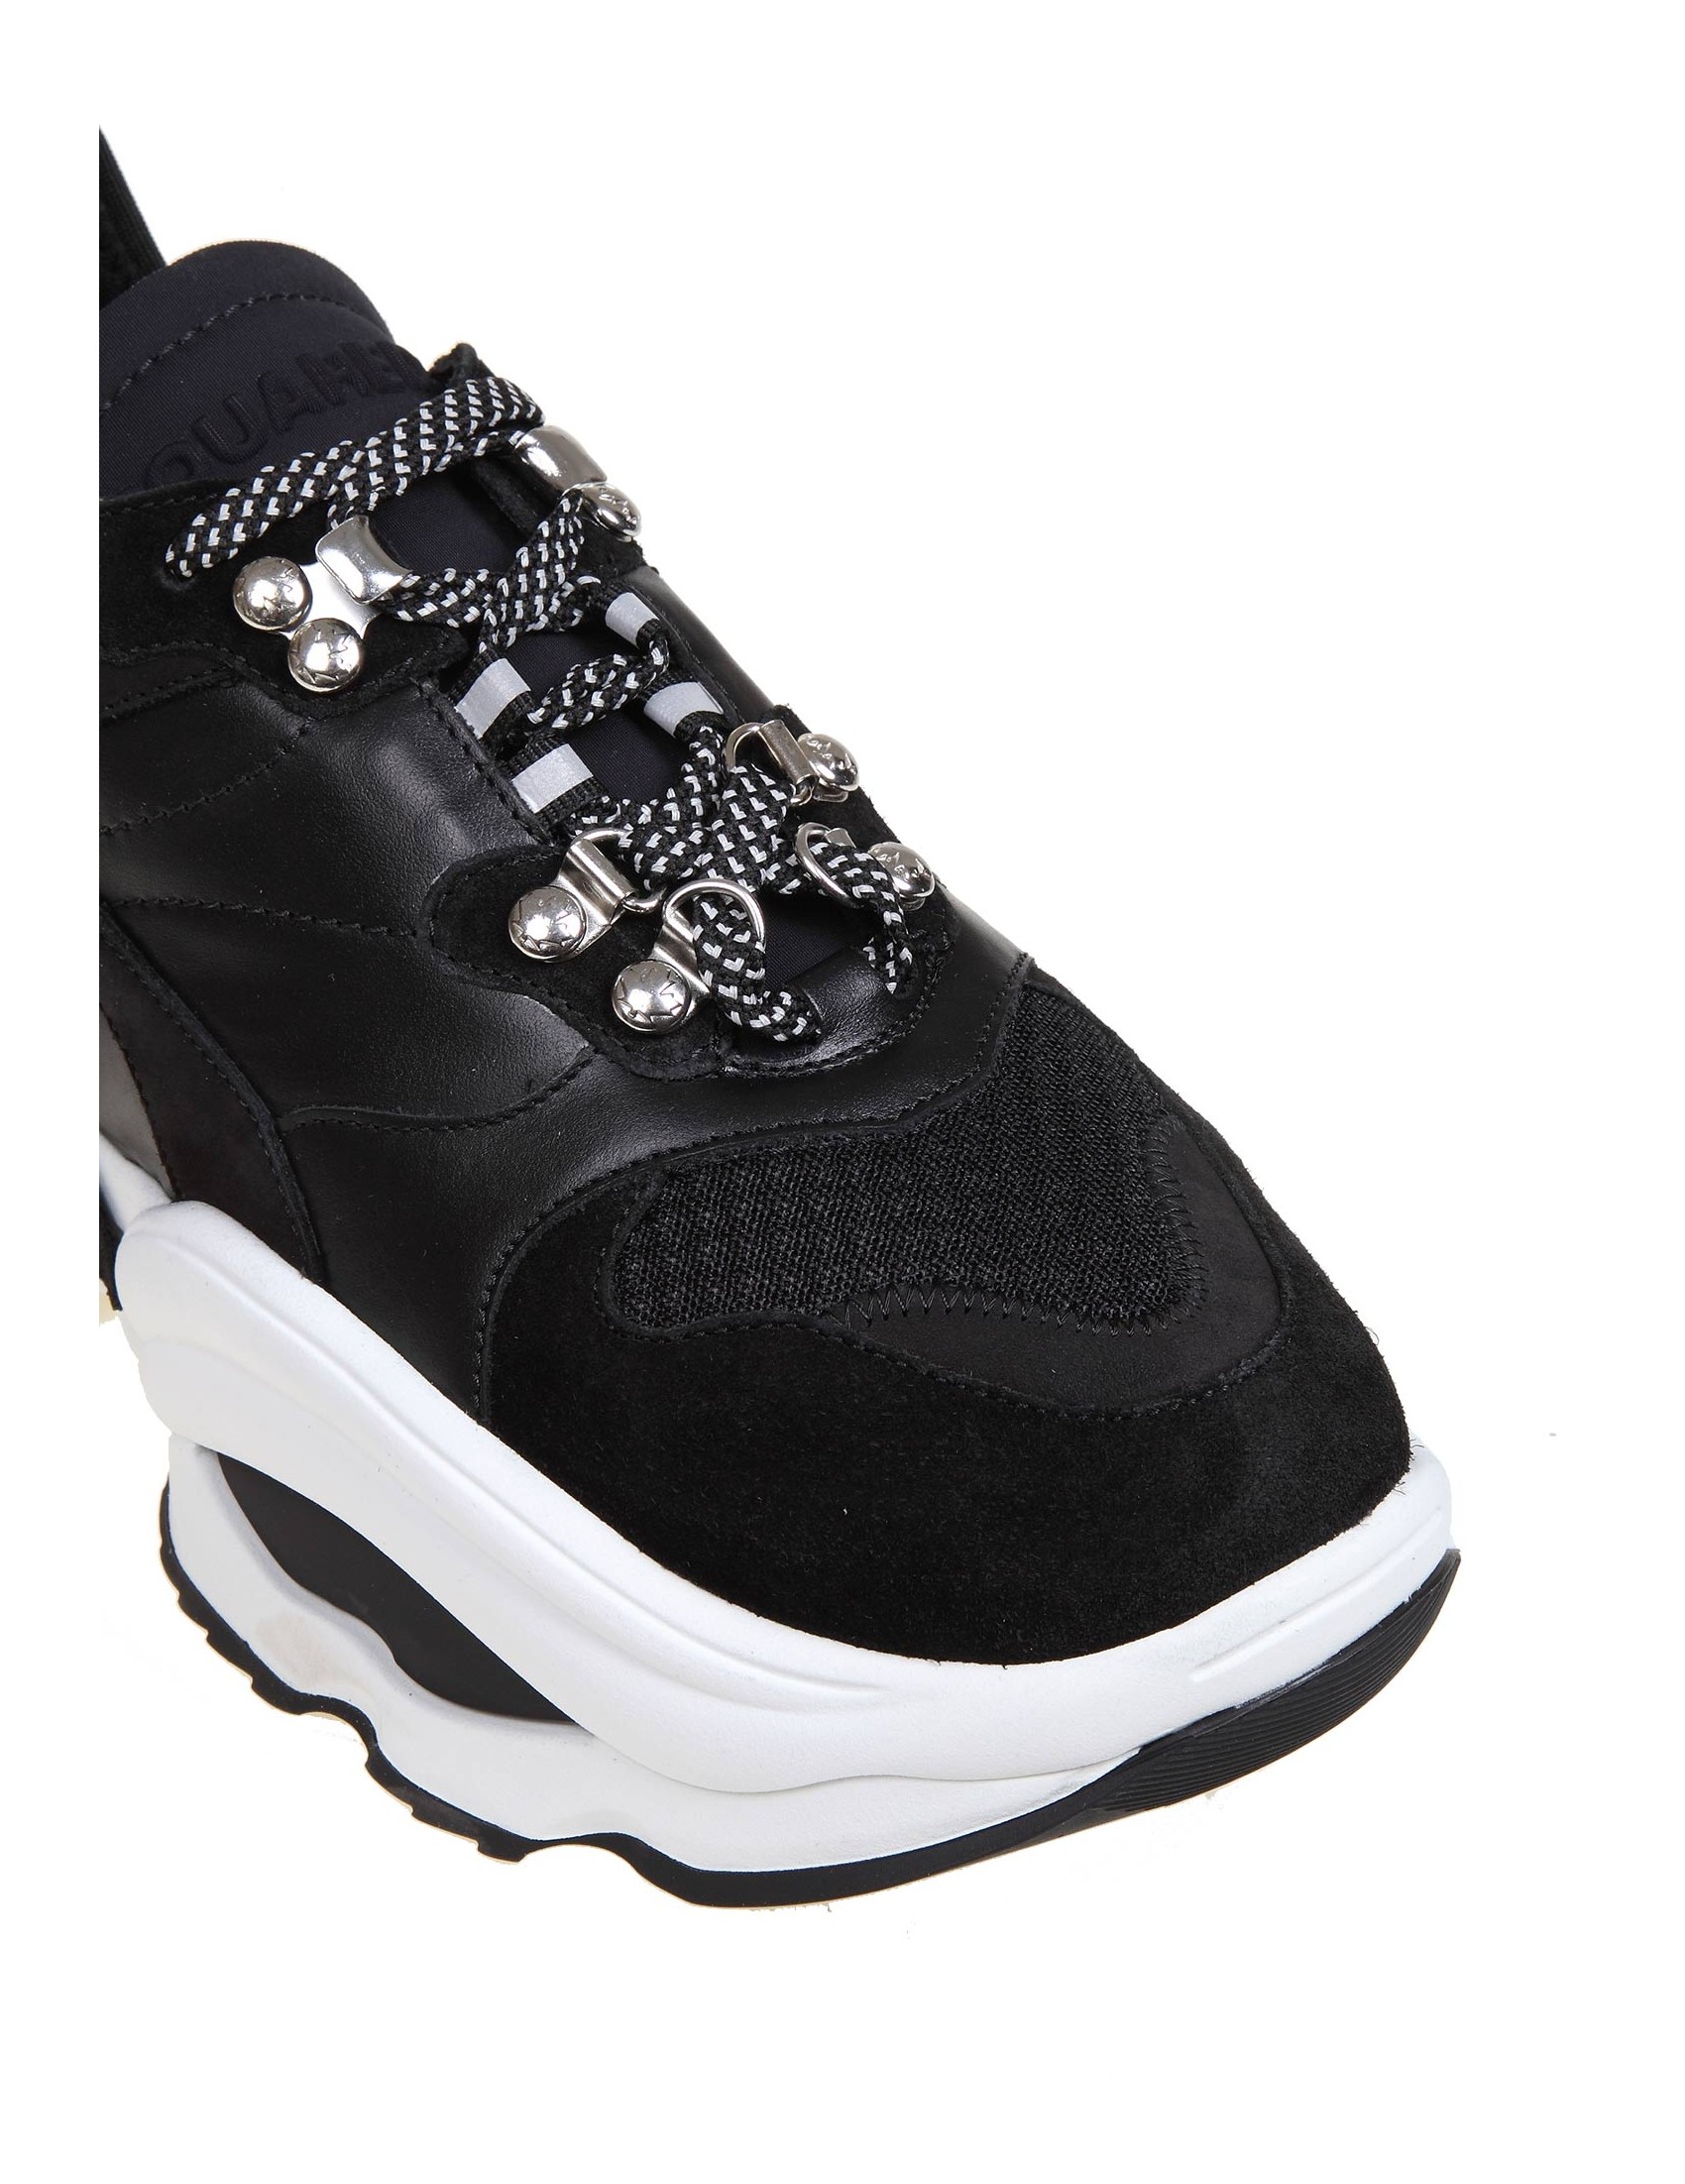 D SQUARED2 Men's Shoes Sneakers Black NIB Authentic 40 41 42 43 44 | eBay